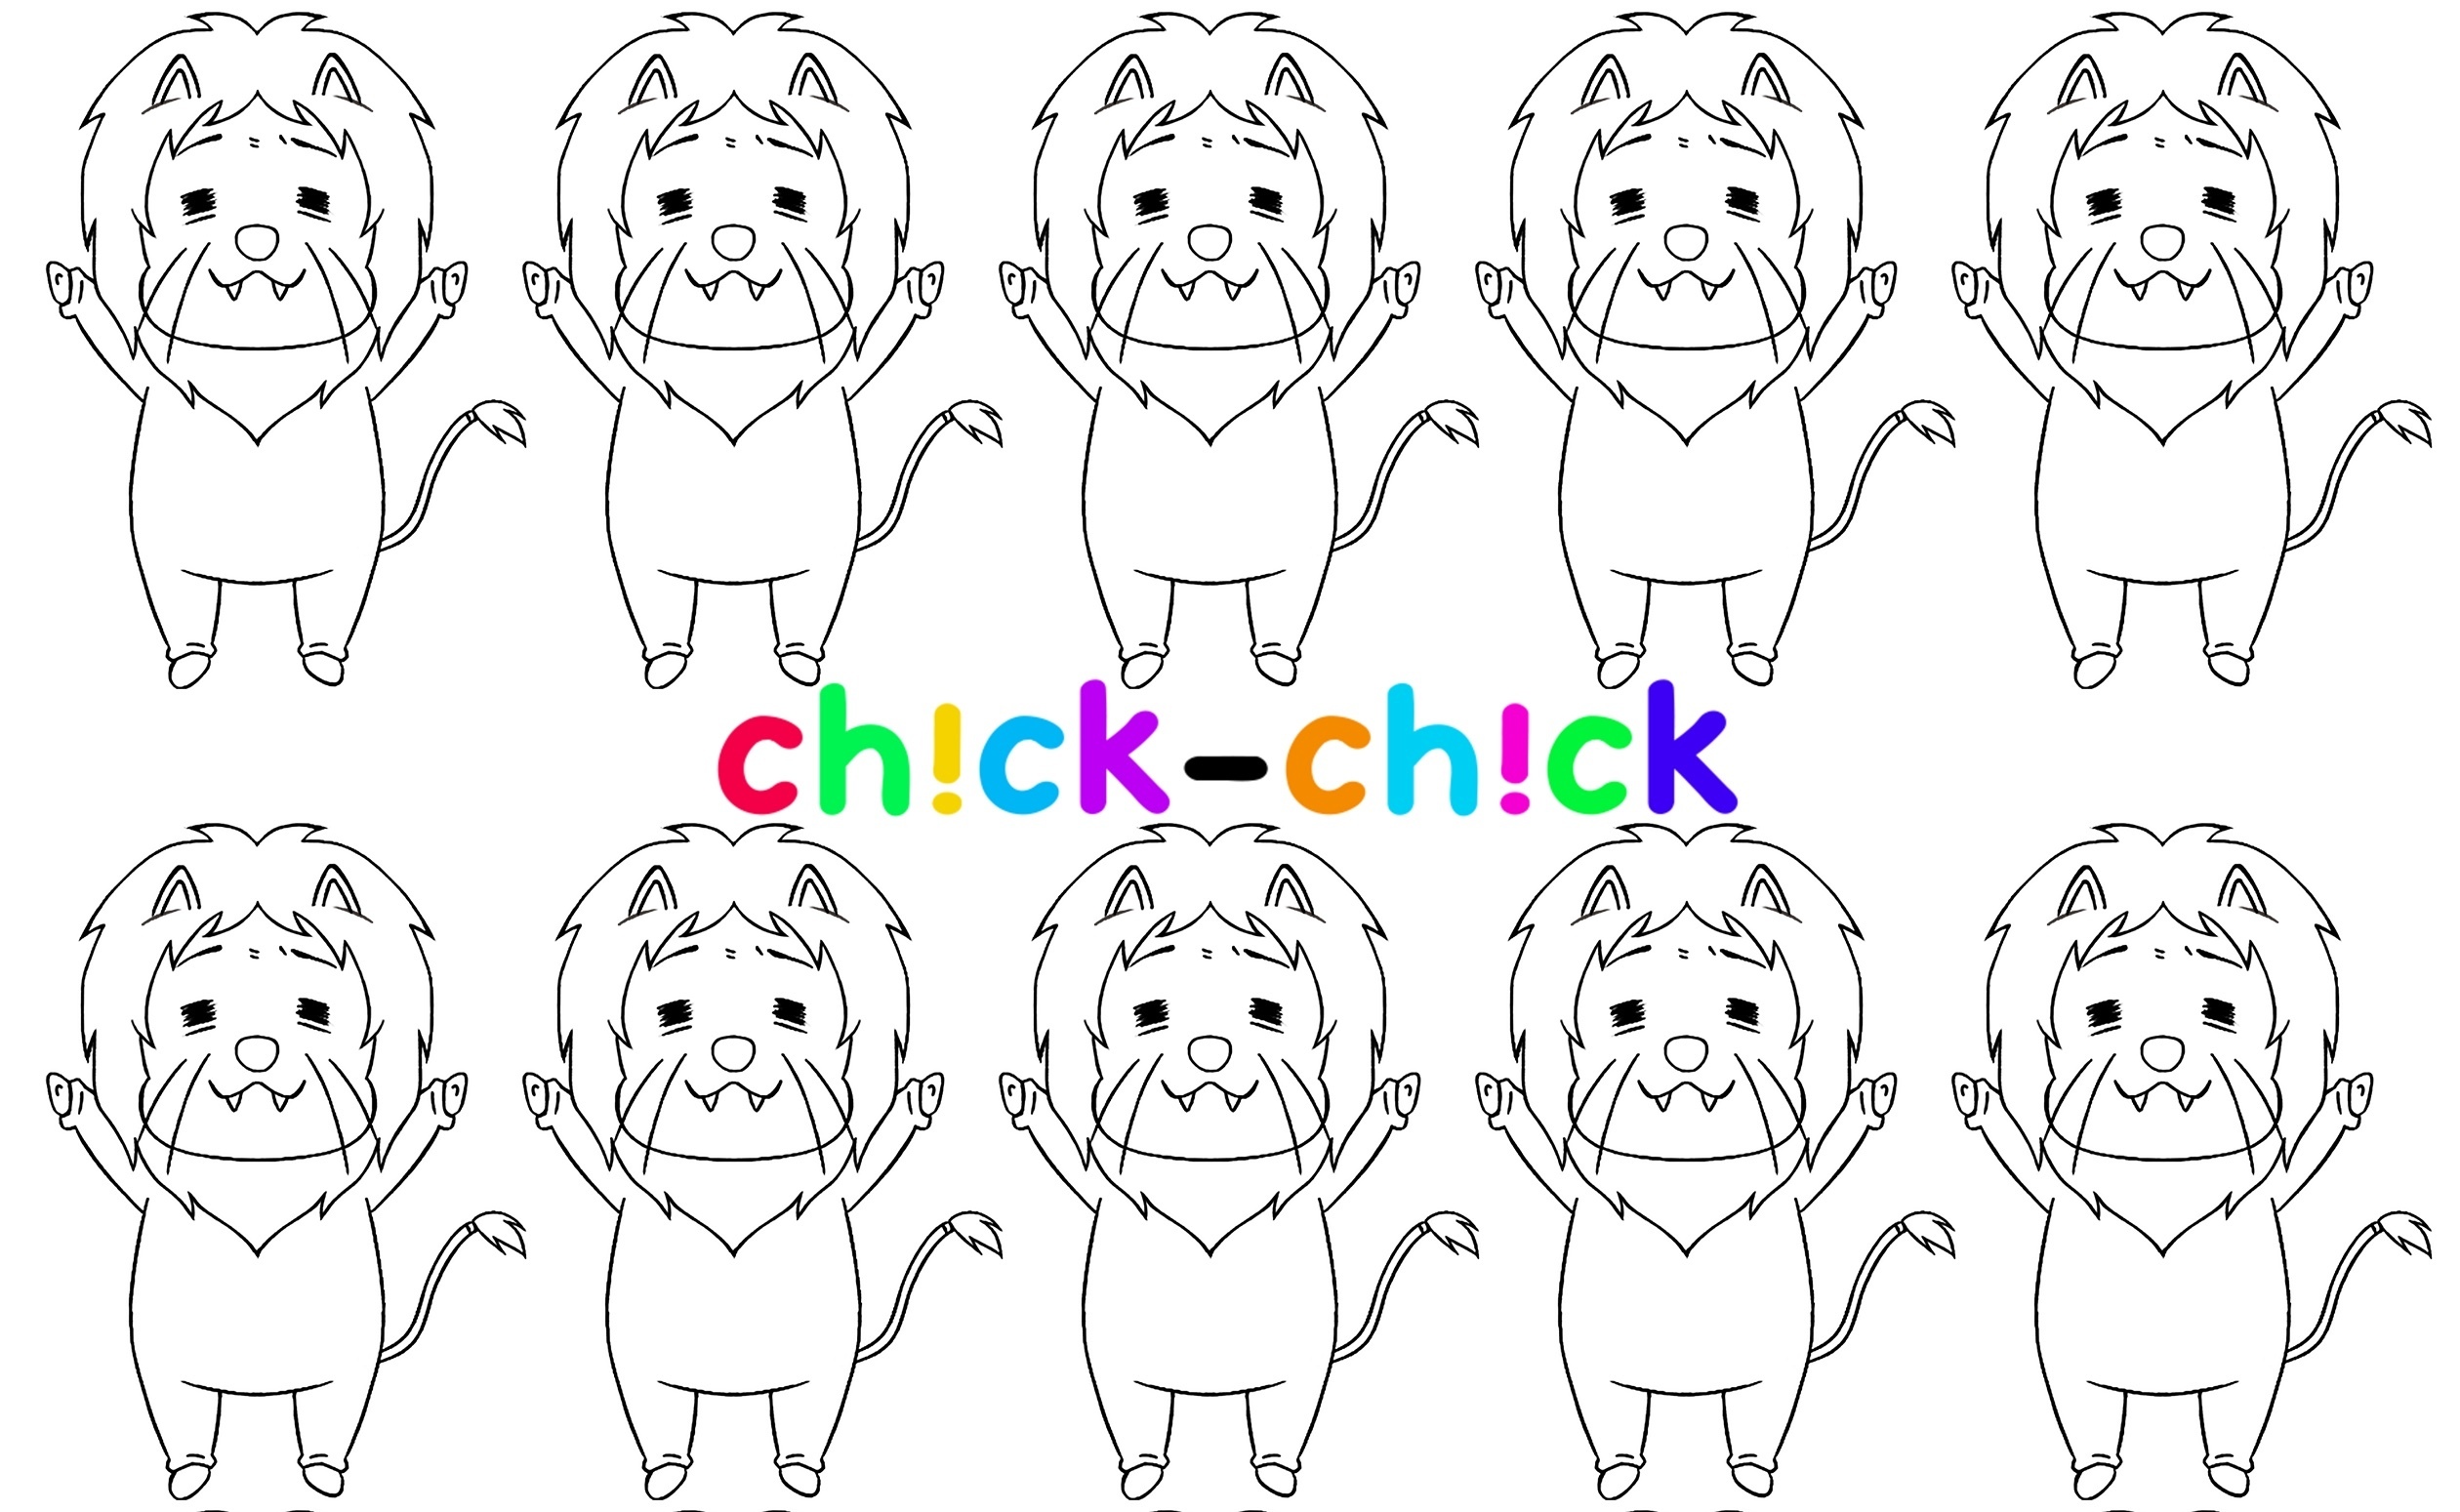 chick-chick